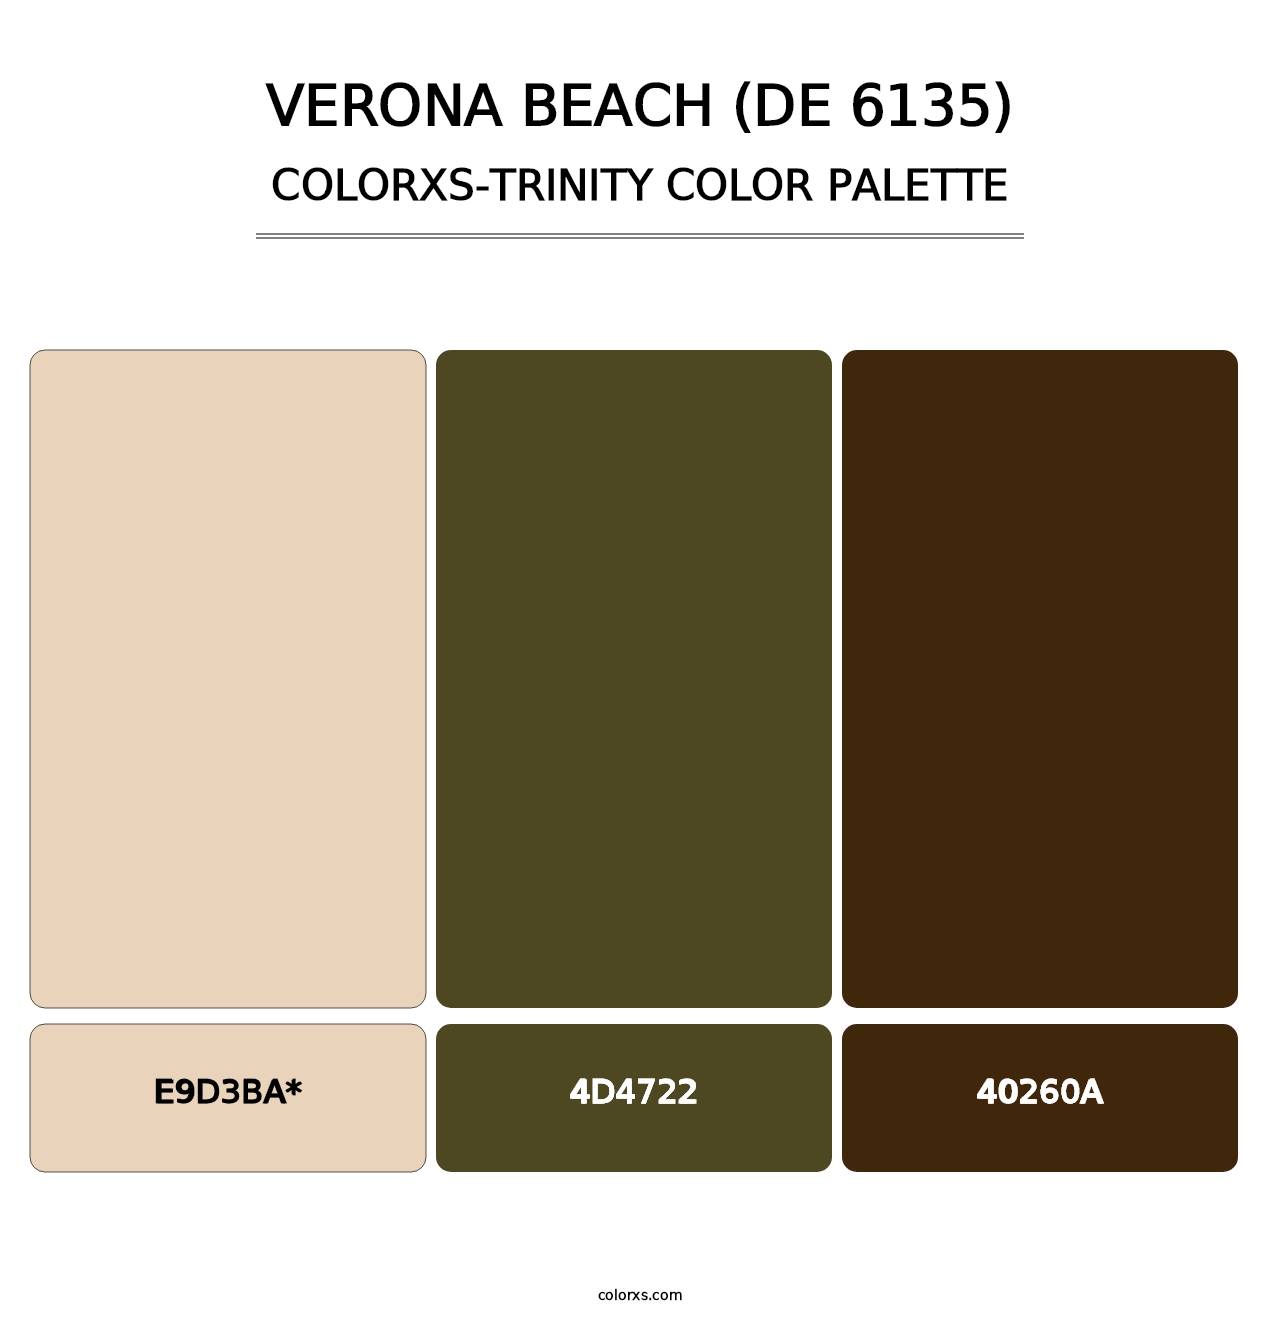 Verona Beach (DE 6135) - Colorxs Trinity Palette